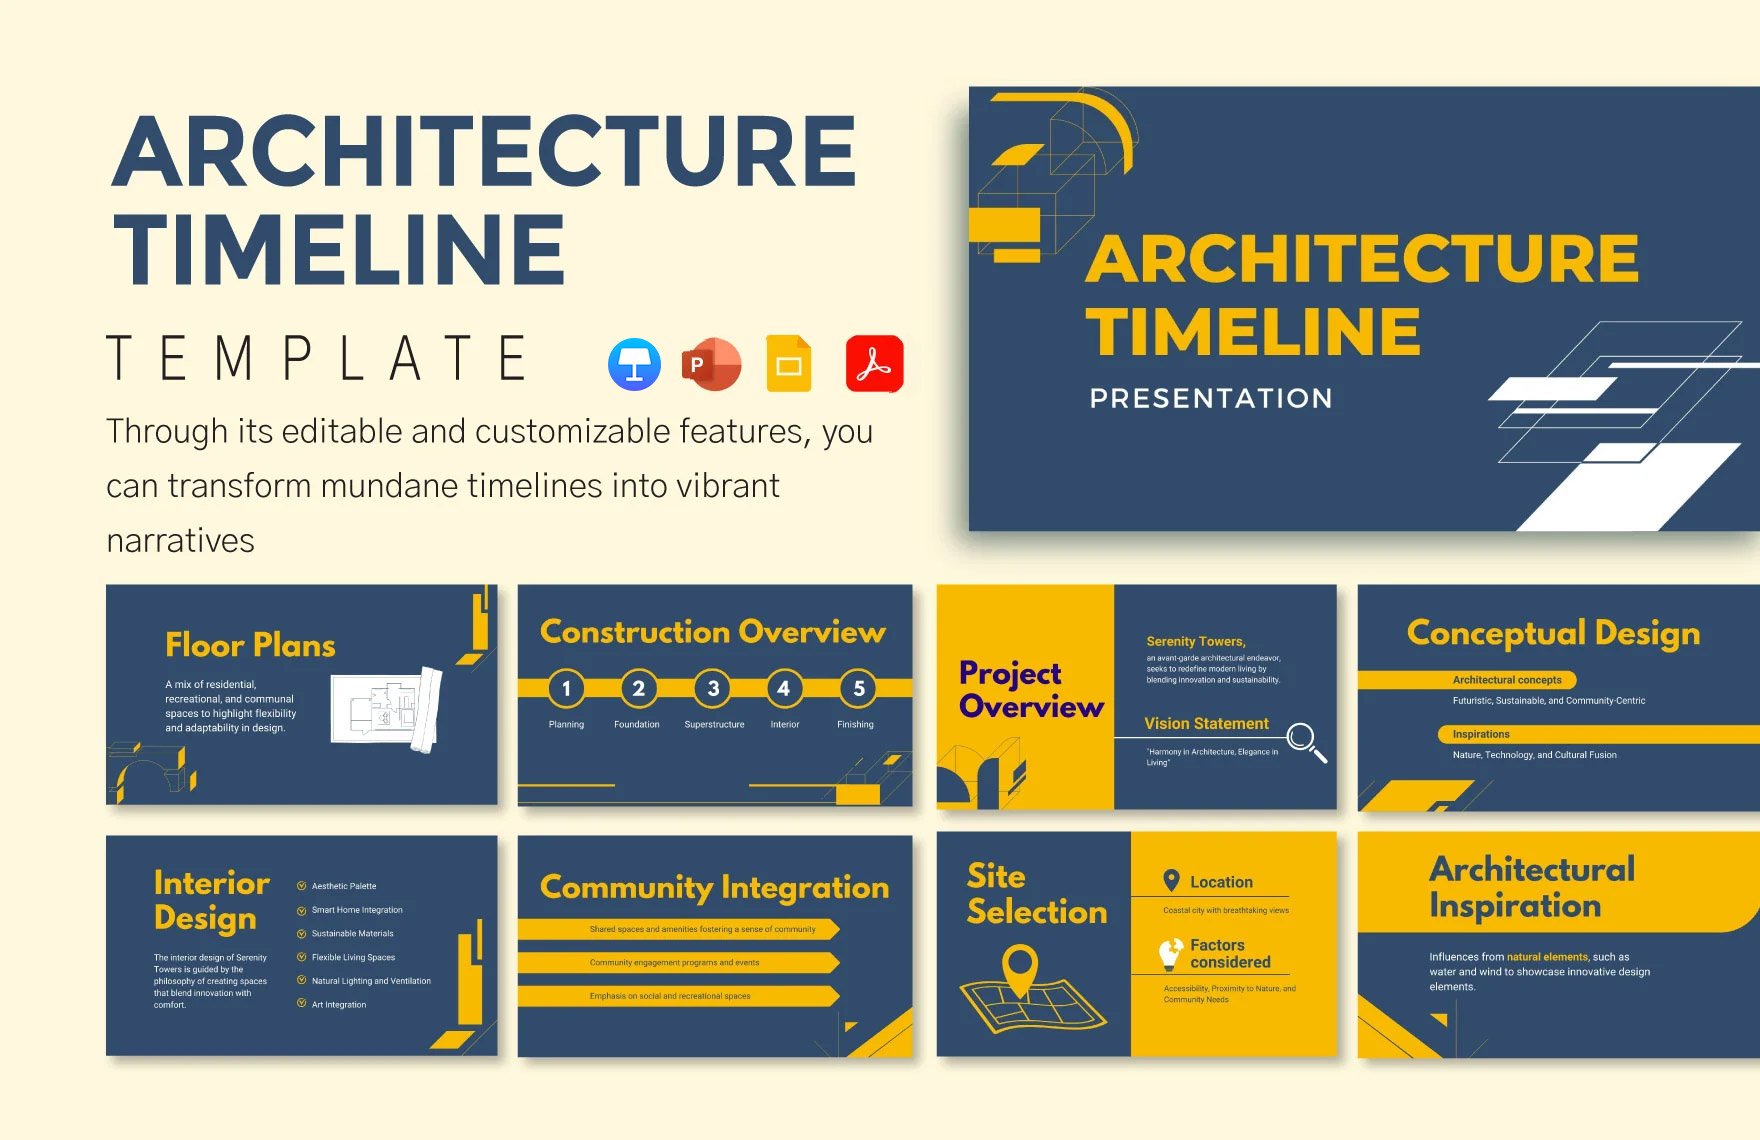 Architecture Timeline Template